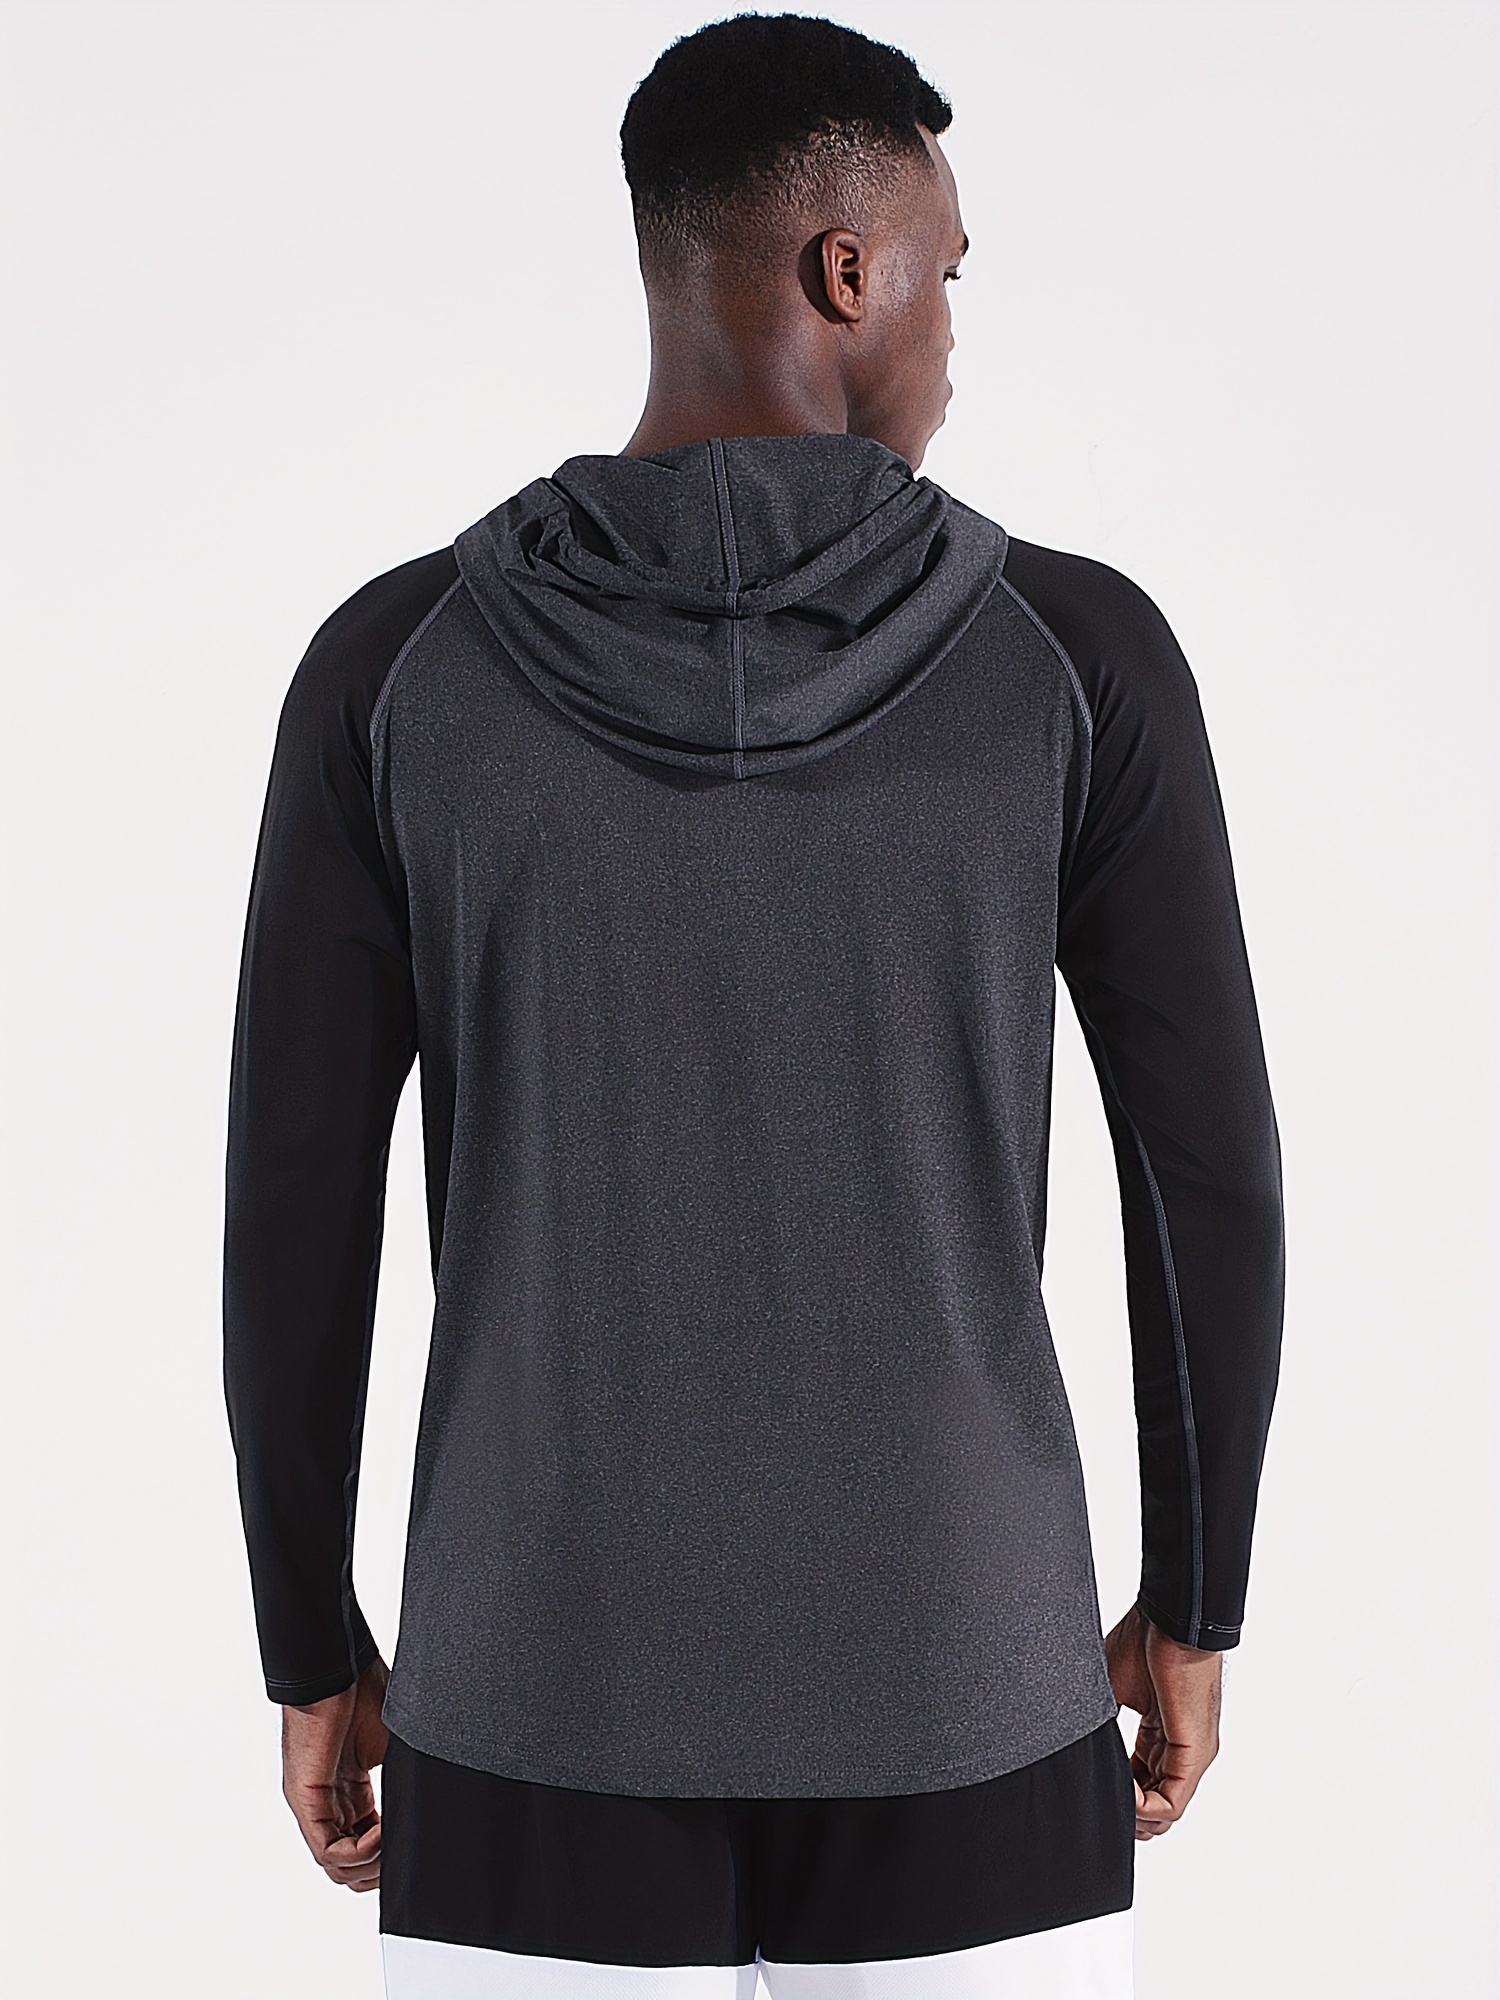 Nike Men's Hoodie Active Sportswear Long Sleeve Fleece Workout Athletic  Pullover 